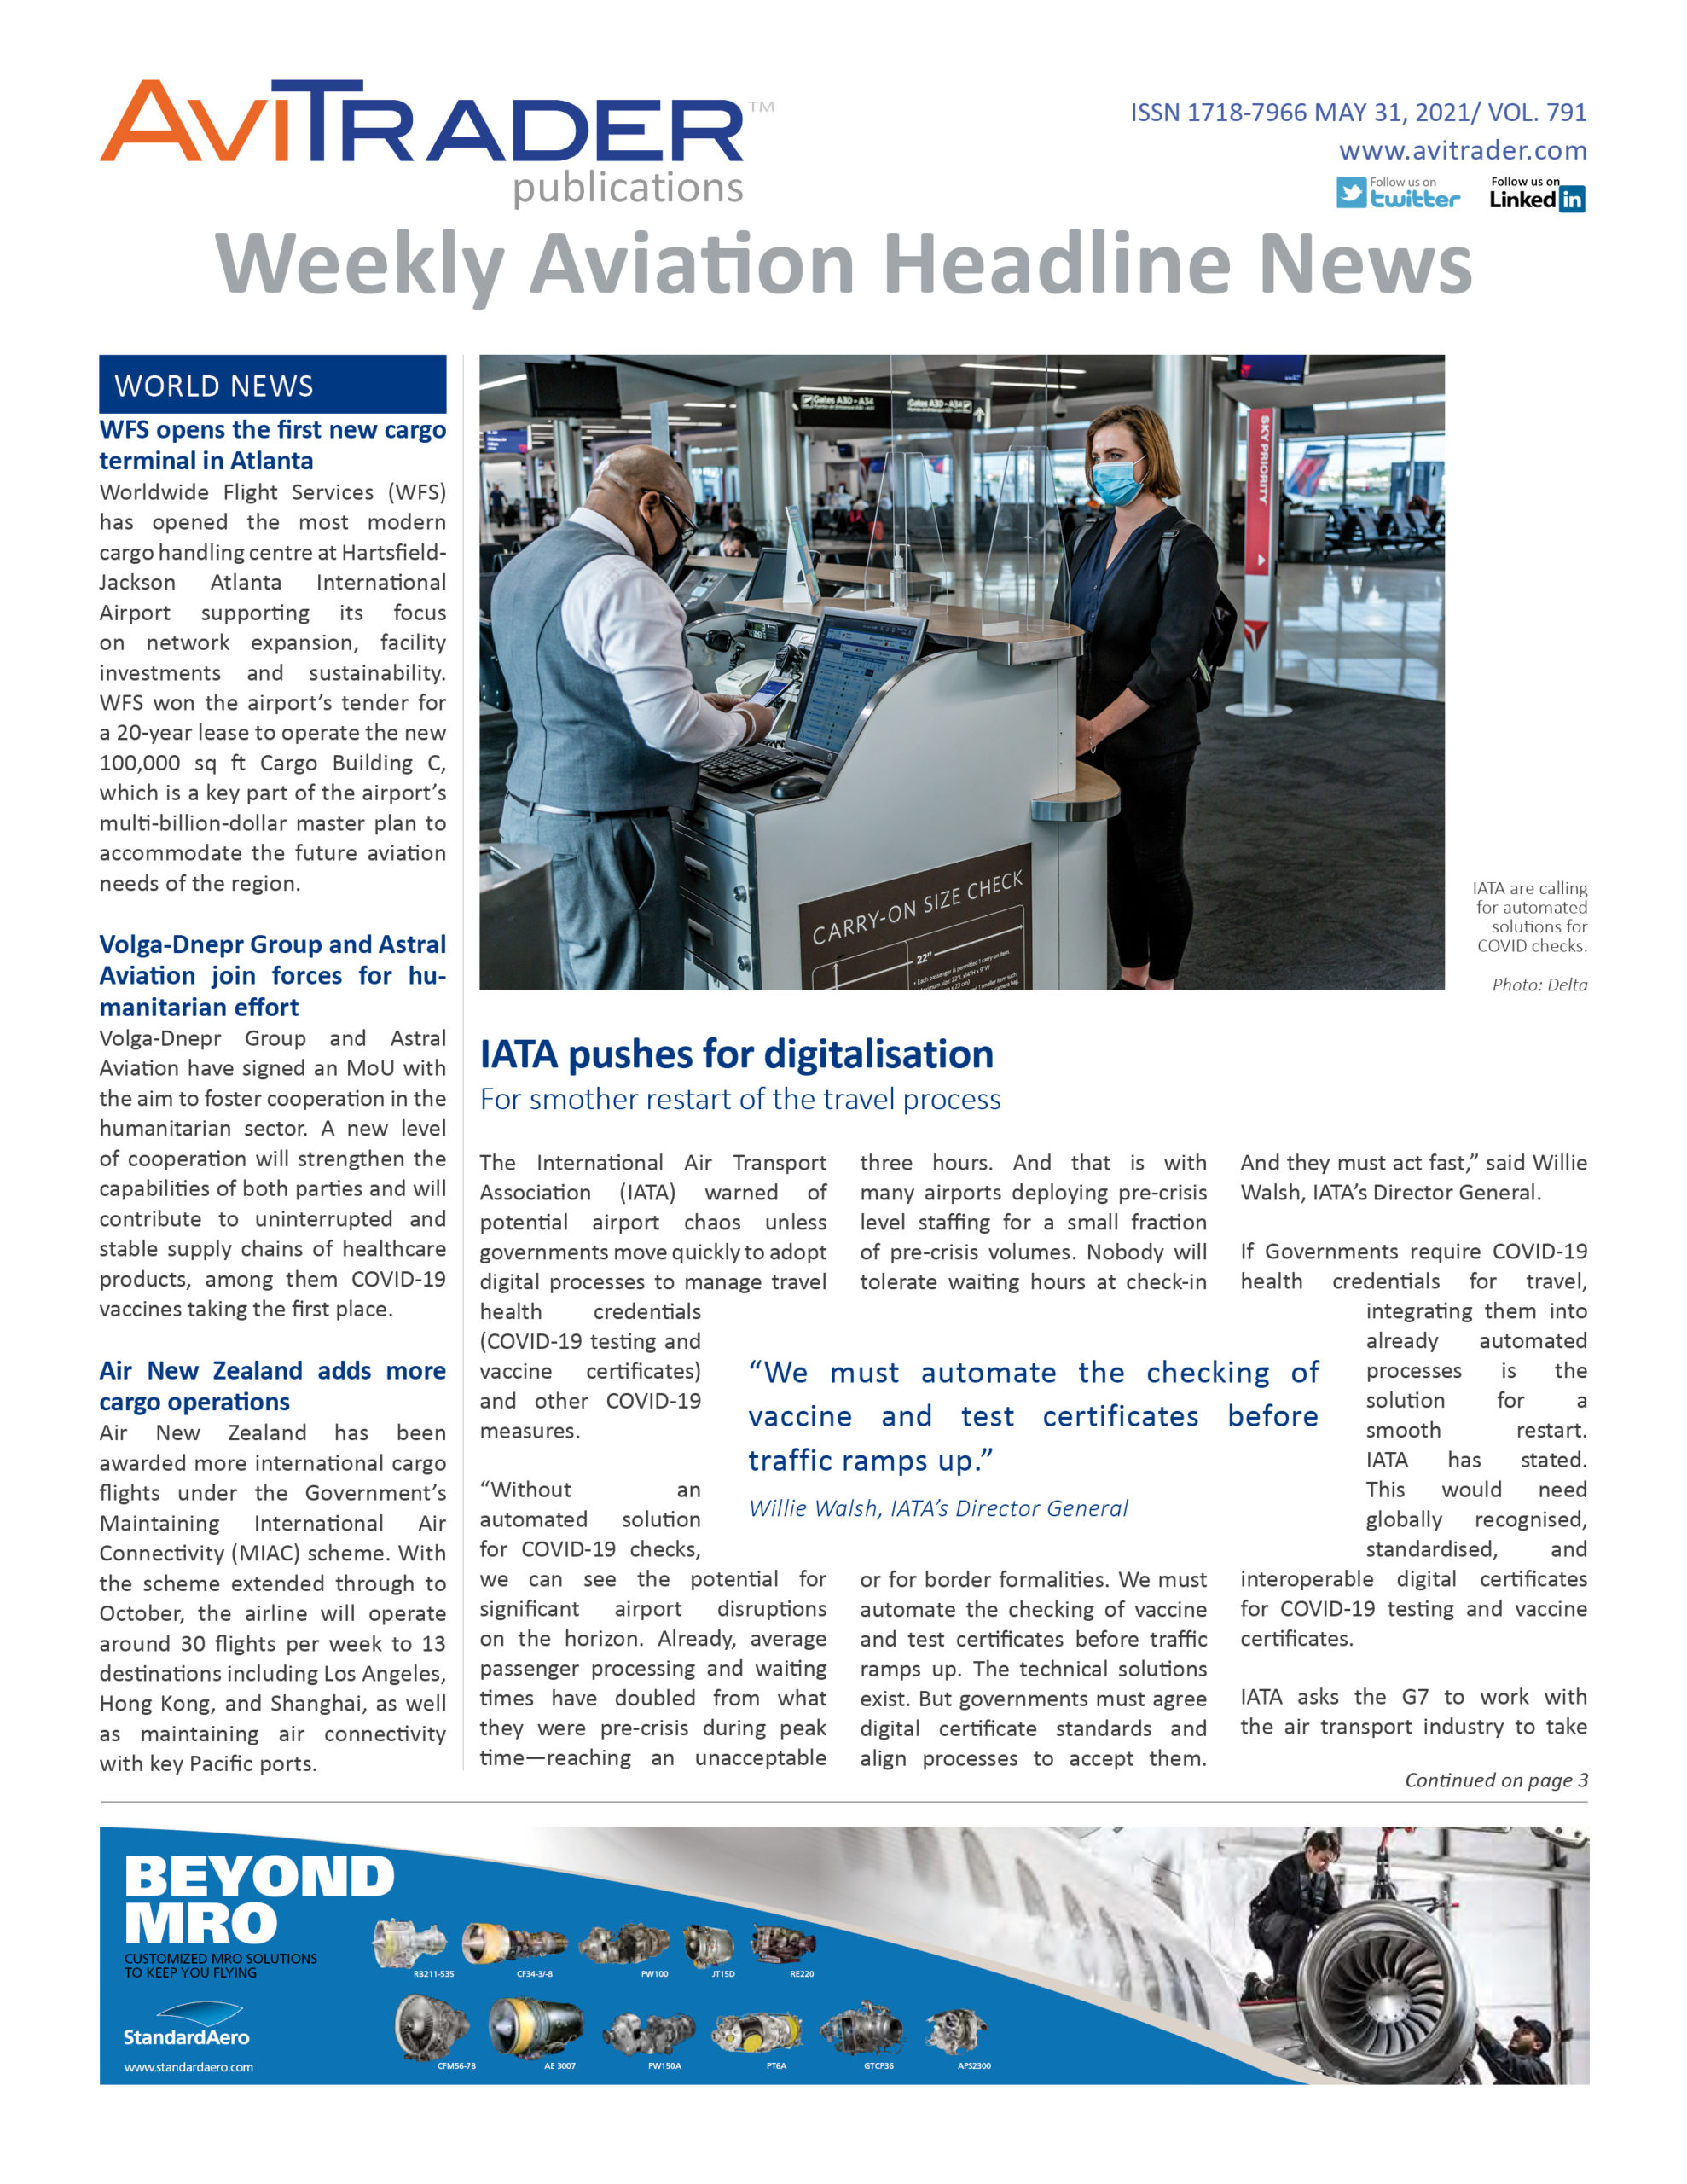 AviTrader_Weekly_Headline_News_Cover_2021-05-31